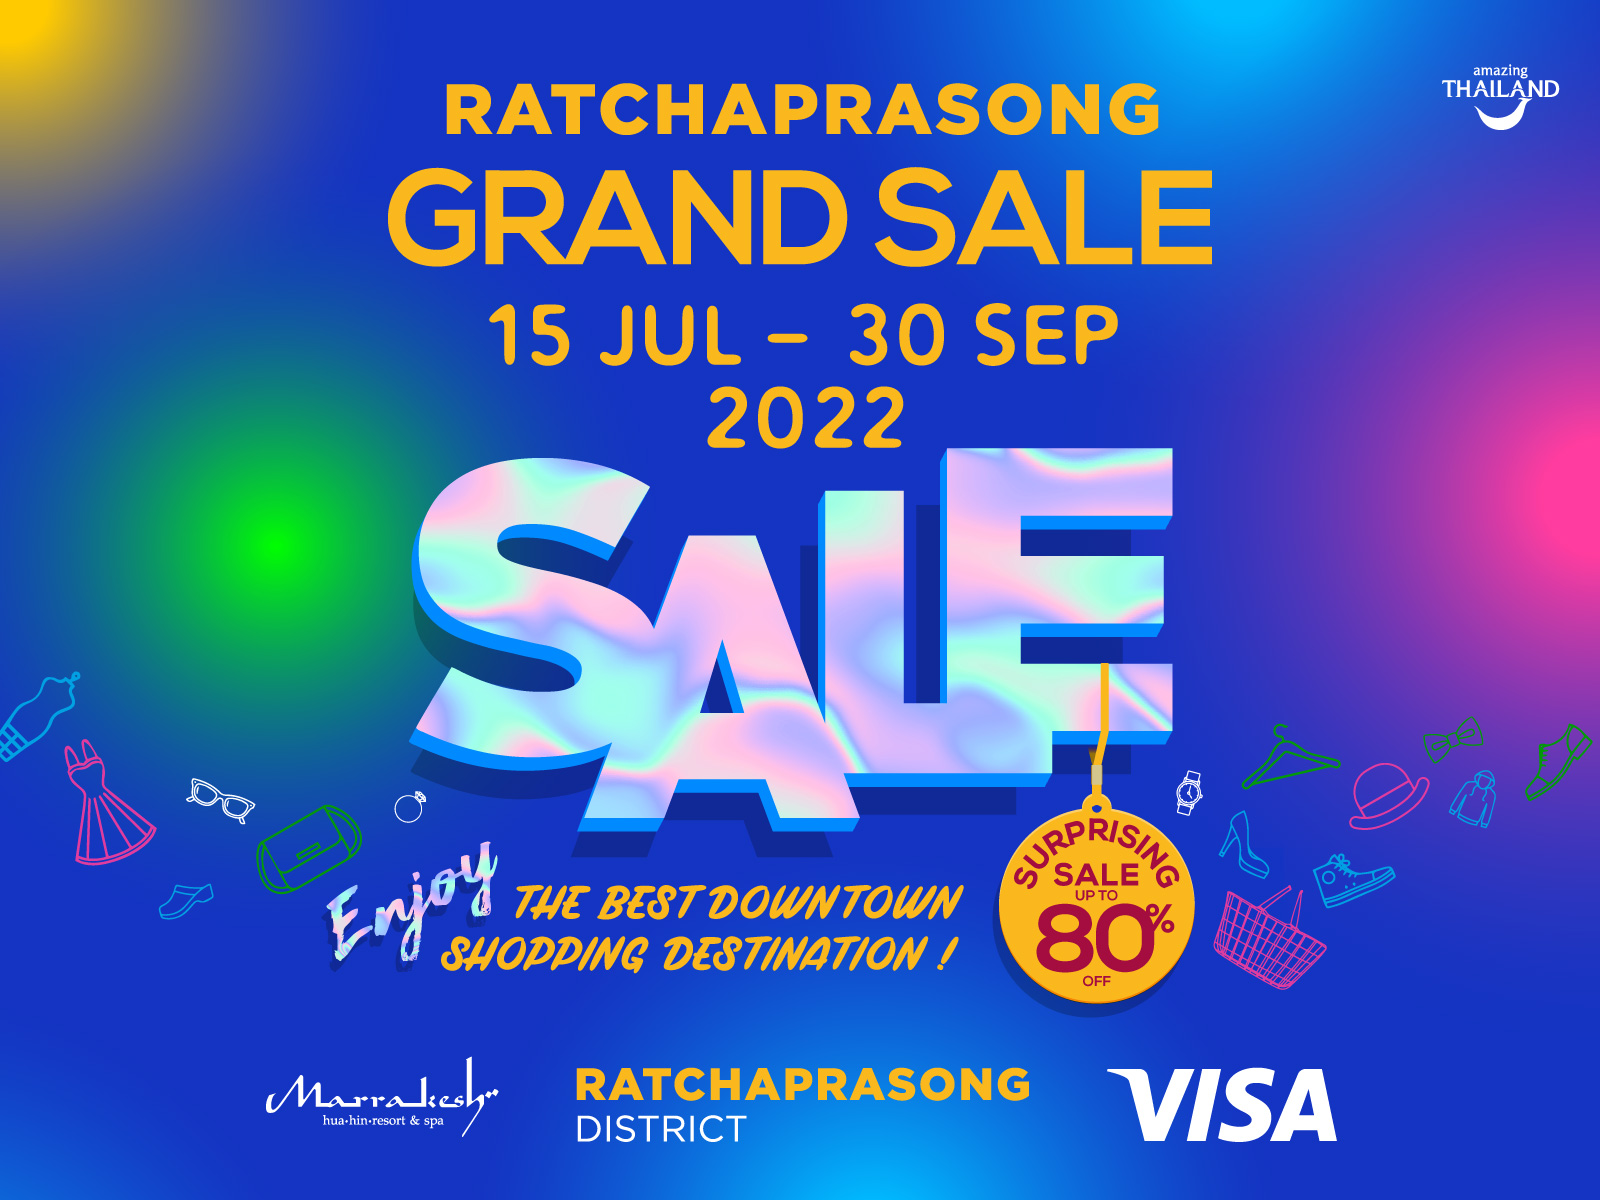 Ratchaprasong Grand Sale 2022